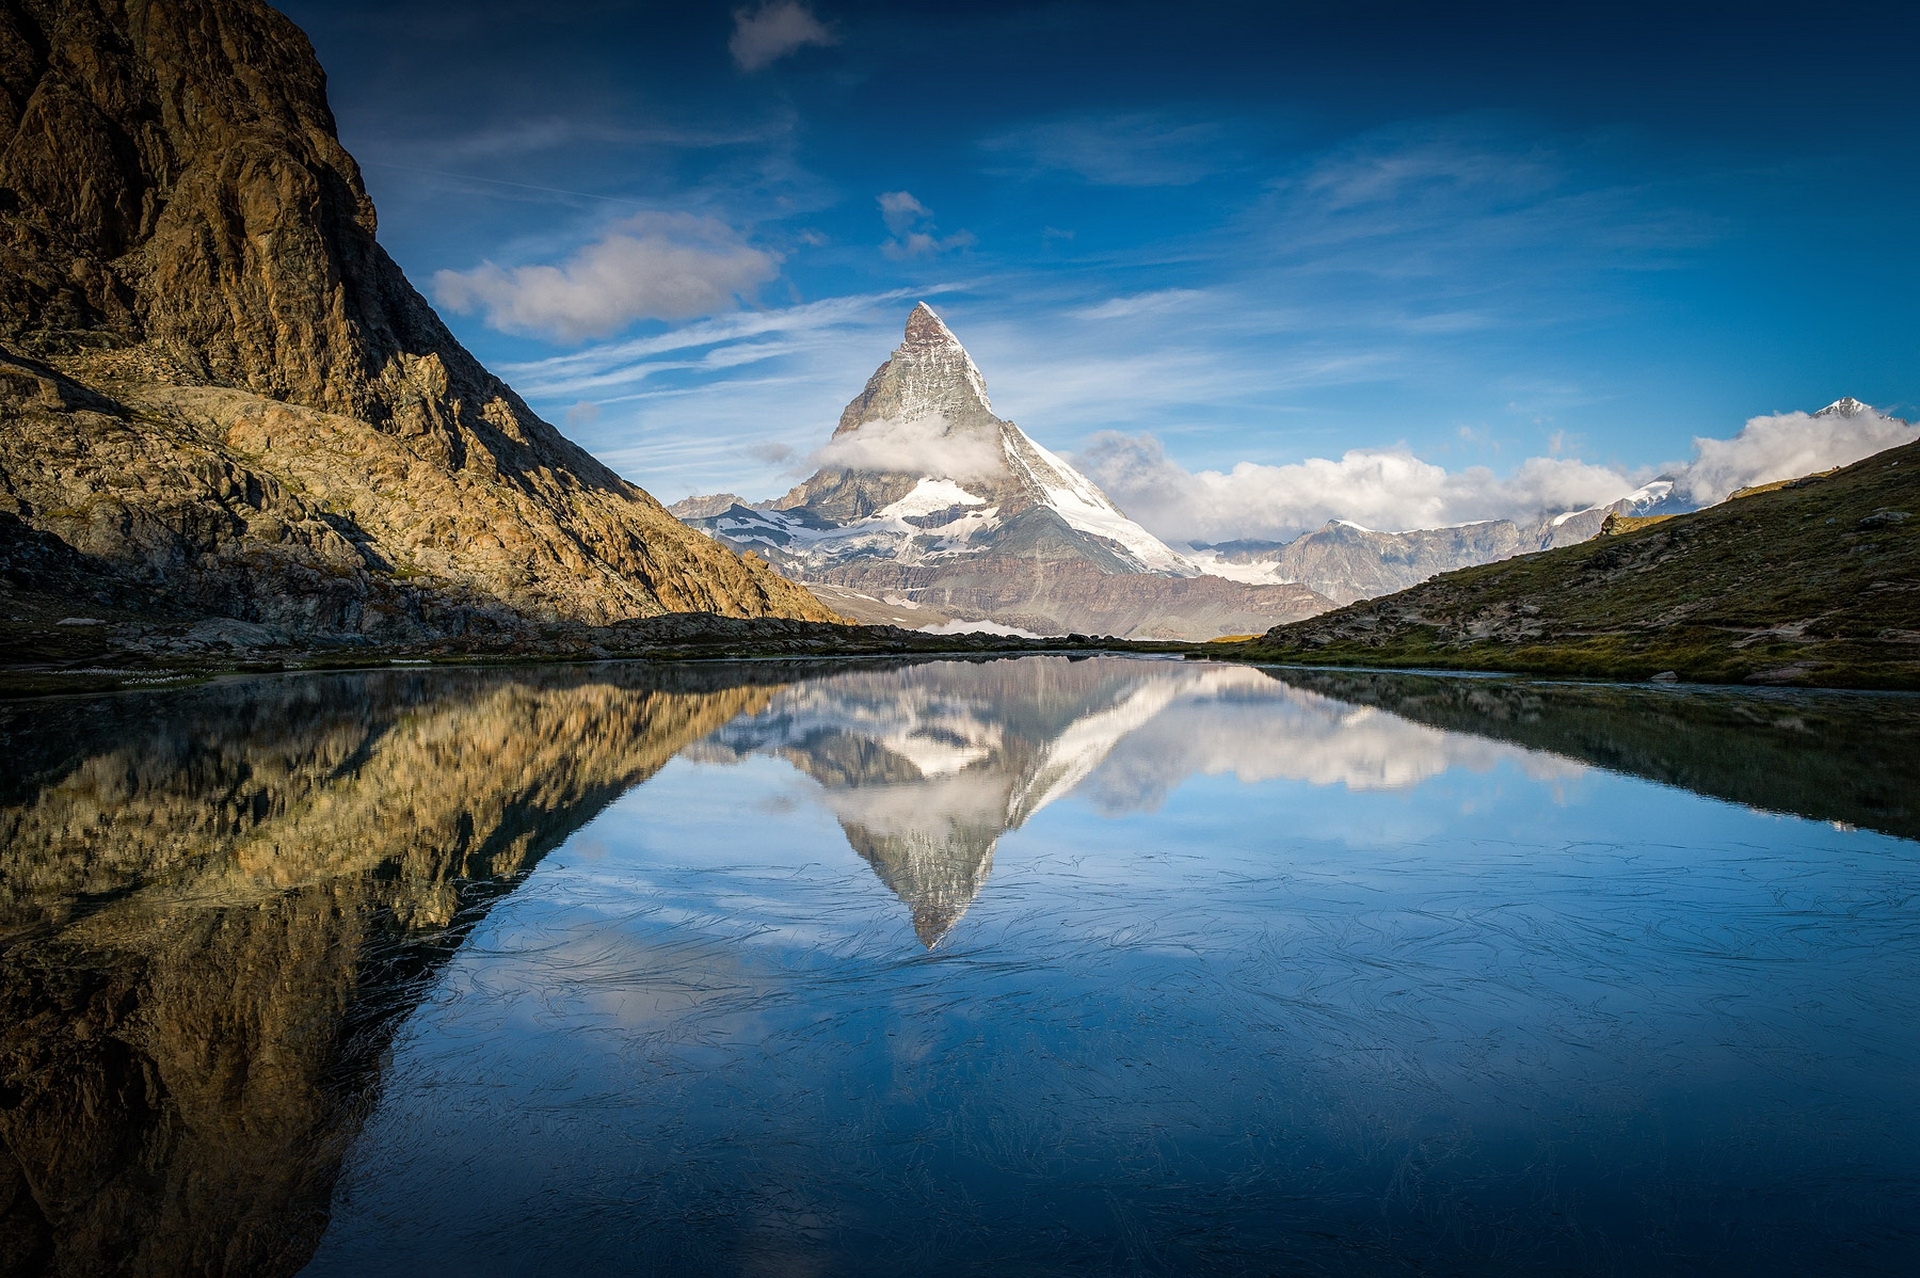 alps, matterhorn, mountains, nature, lake, reflection